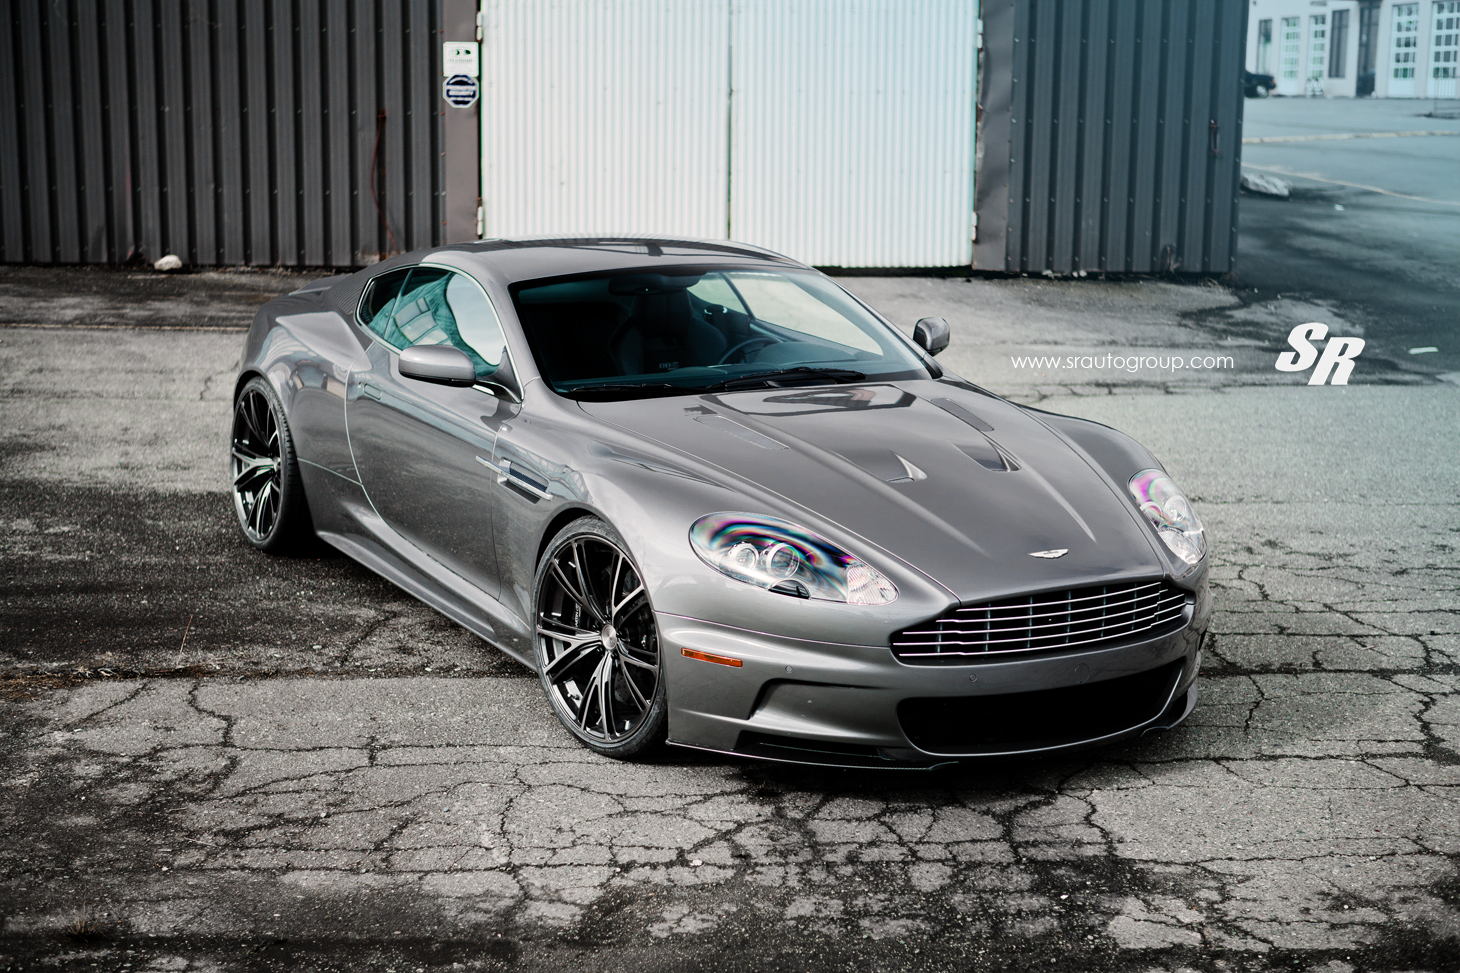 Aston Martin DBS Backgrounds on Wallpapers Vista